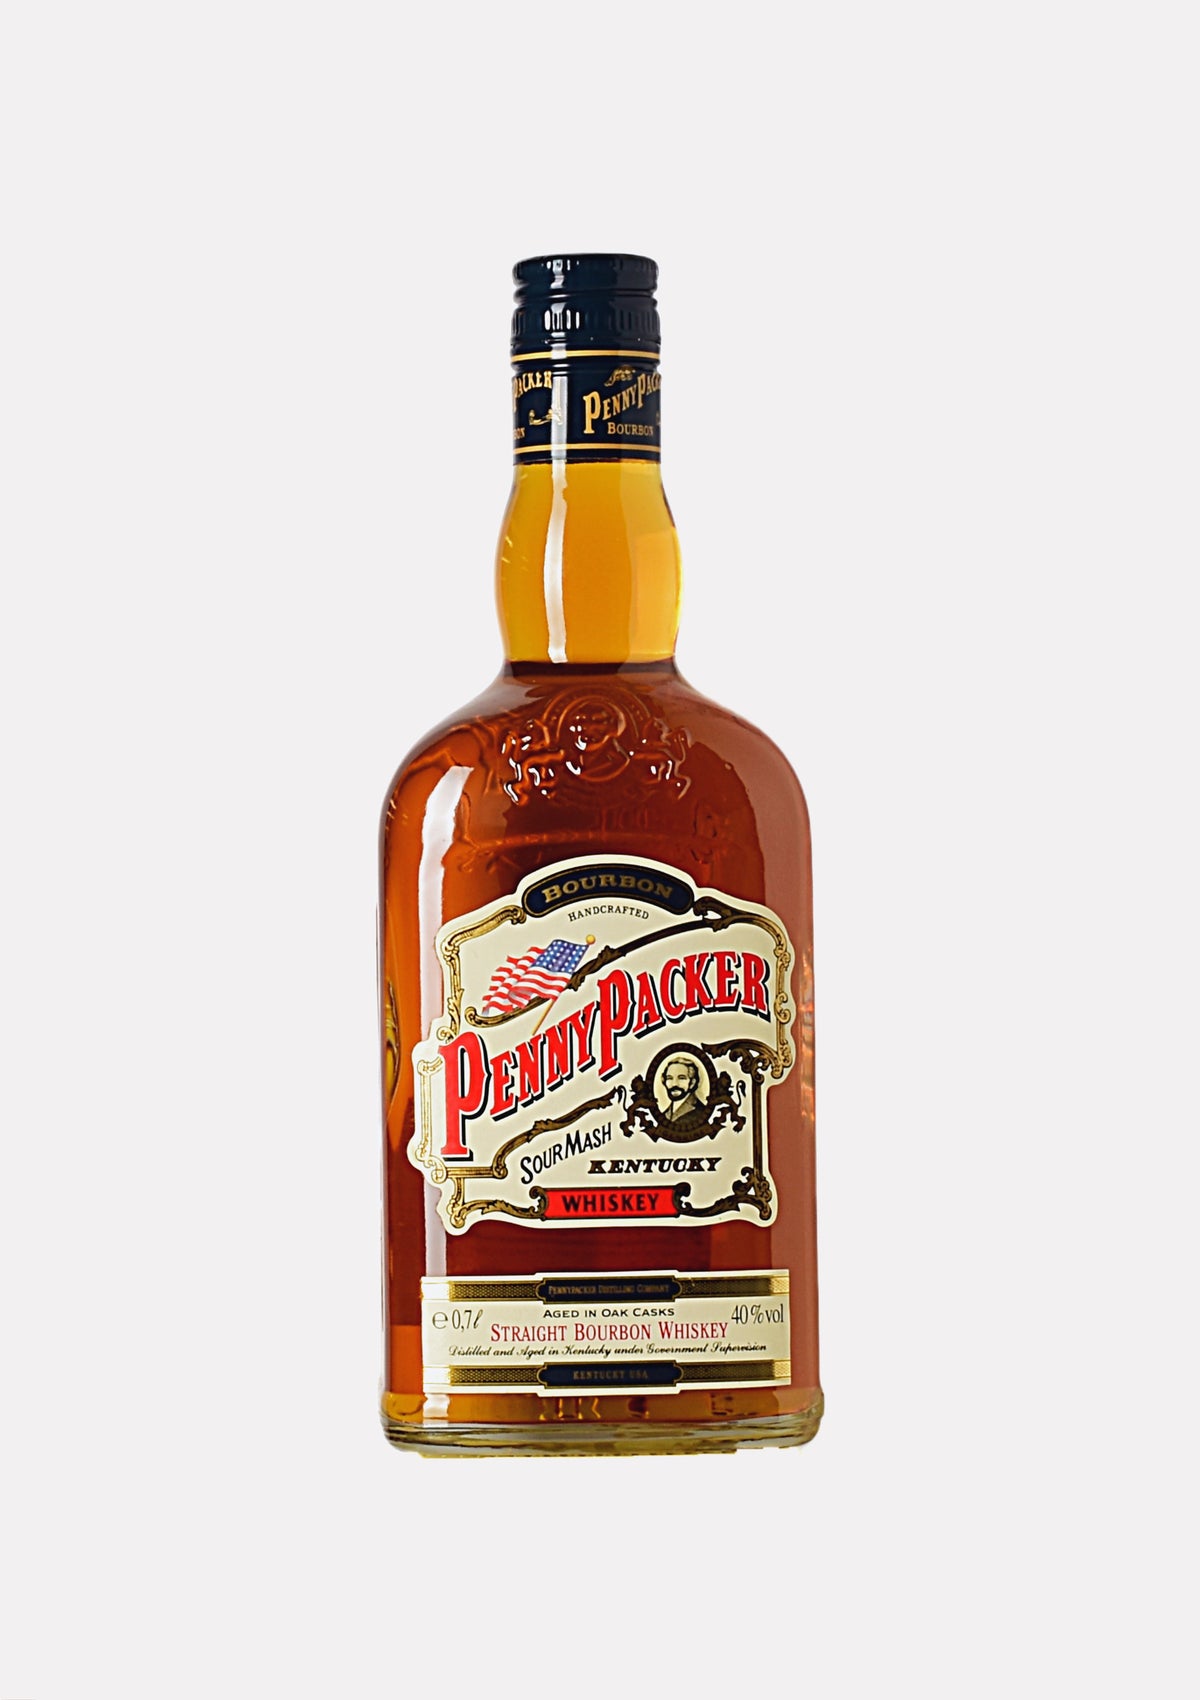 Penny Packer Sour Mash Kentucky Whiskey